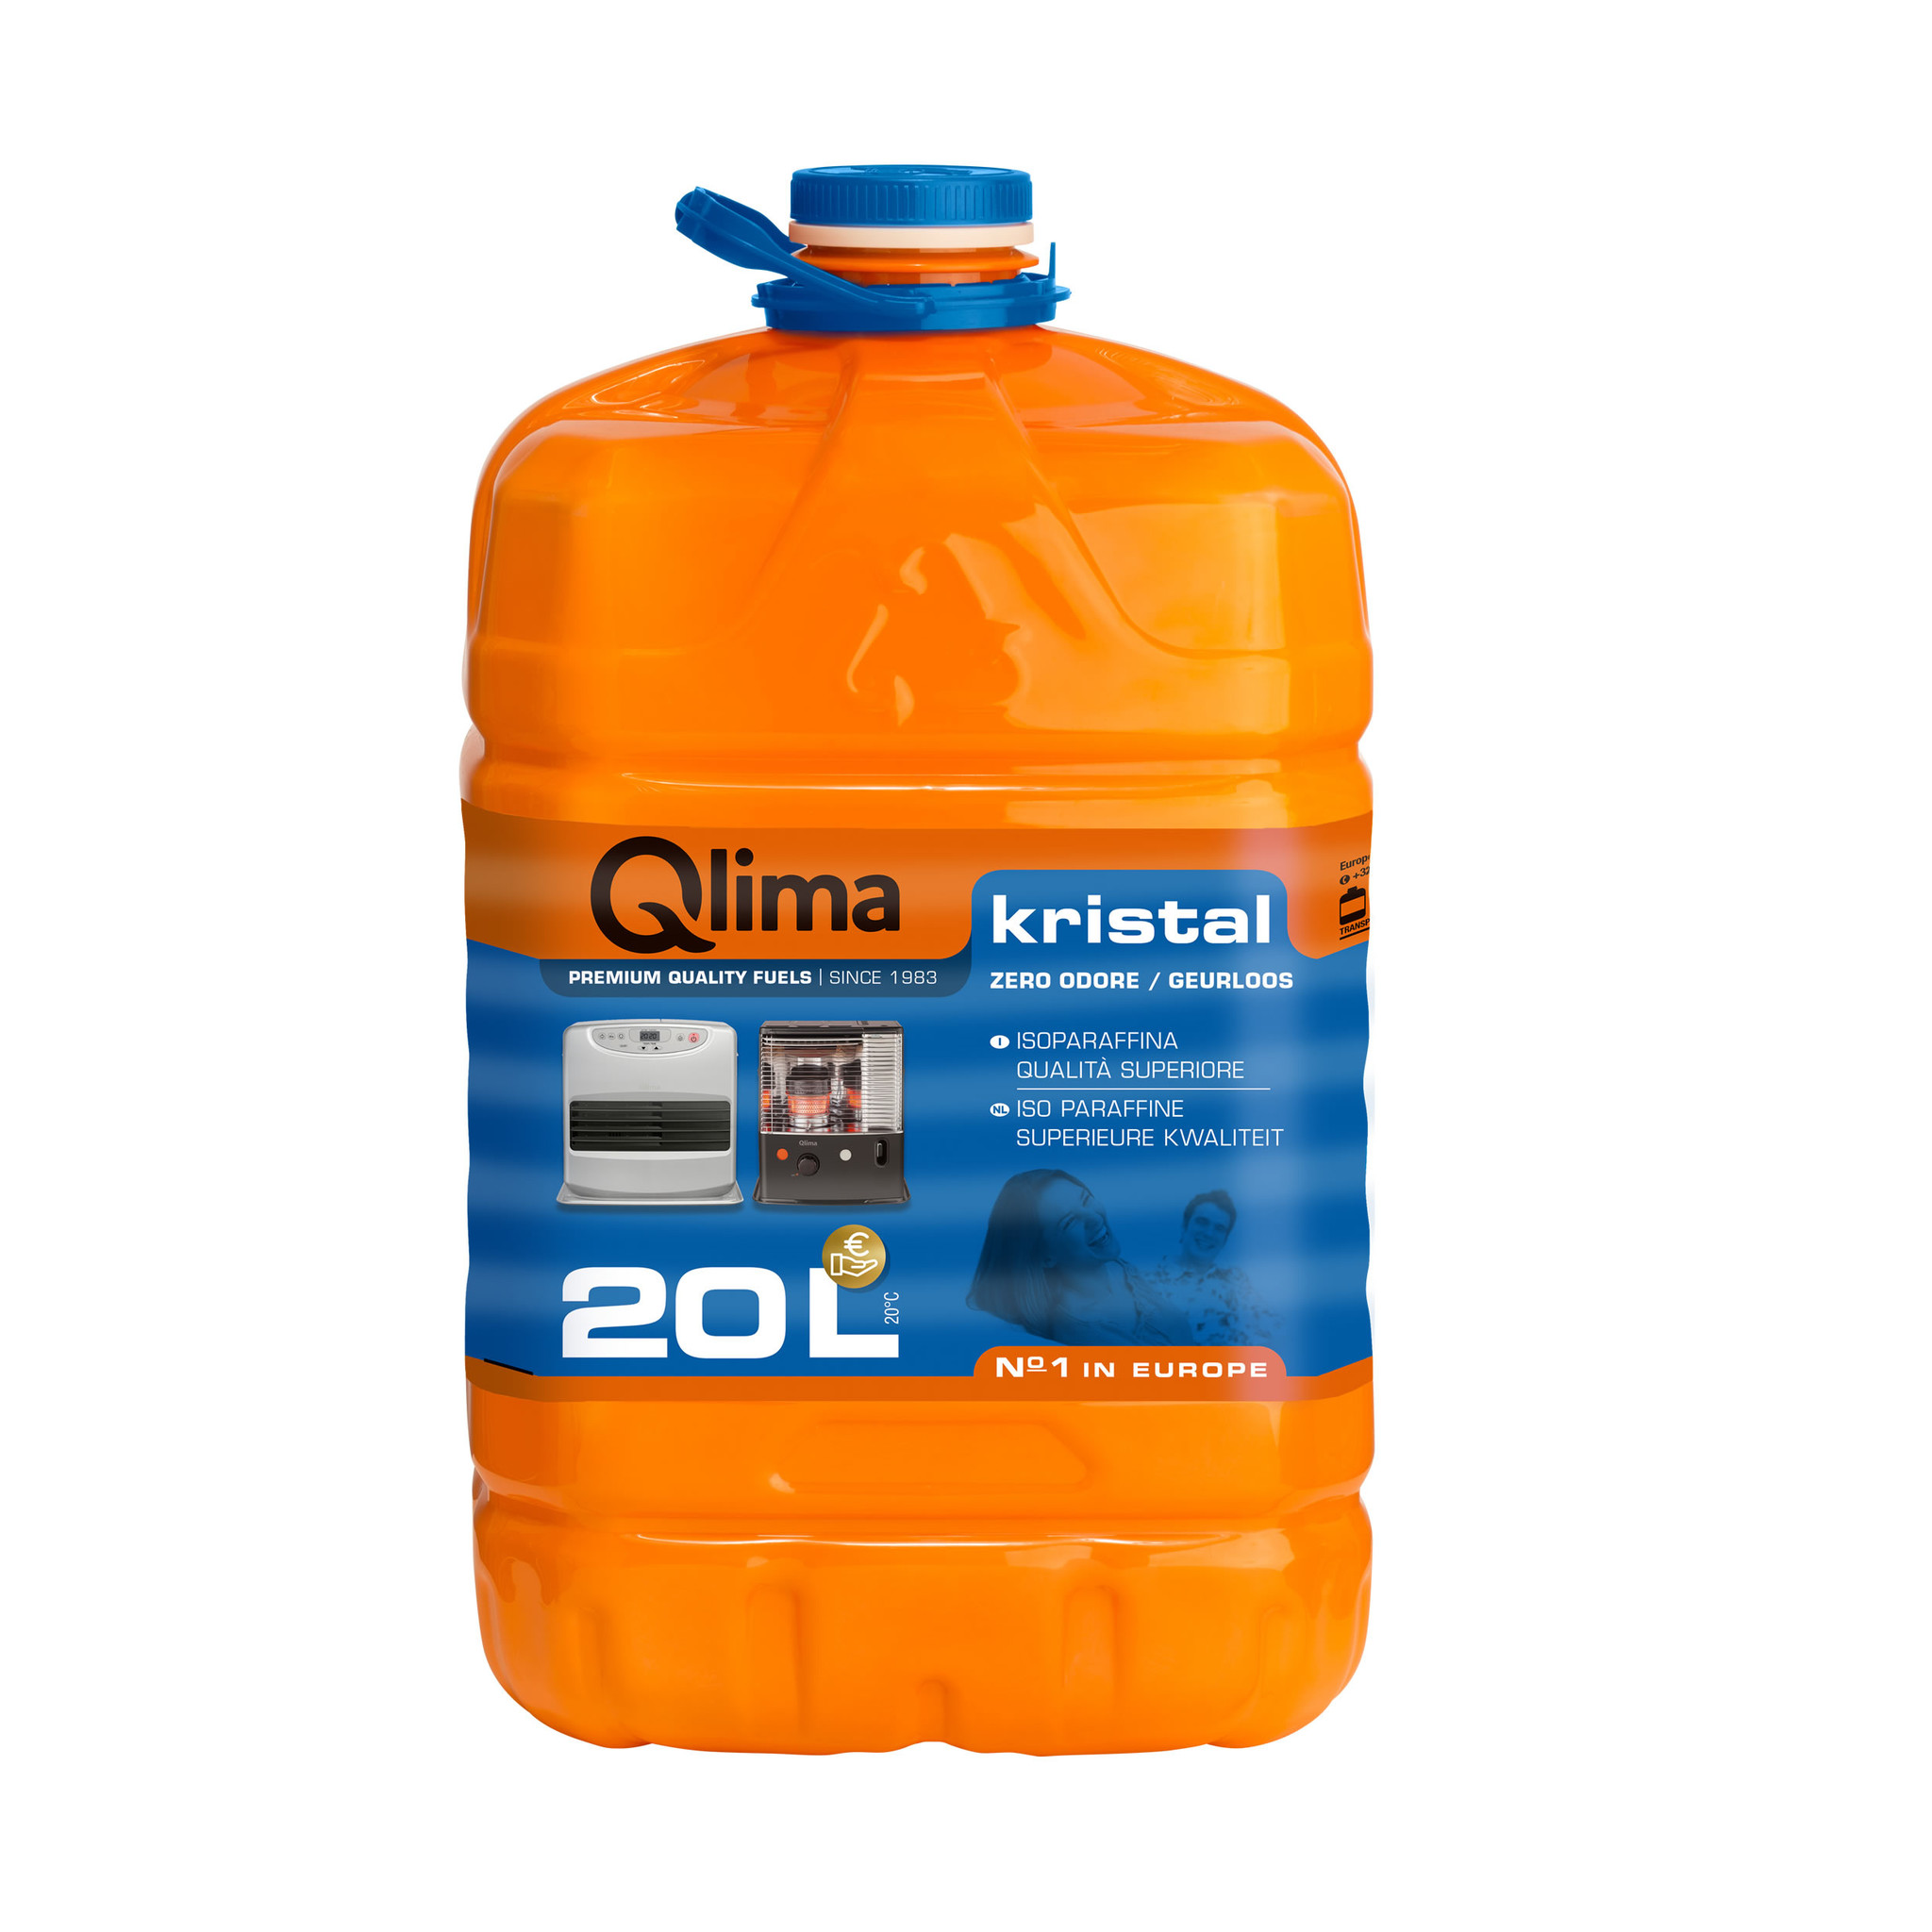 Kiwi marketing extract Qlima geurloze kachelbrandstof Kristal 20 liter | Climatewebshop.com